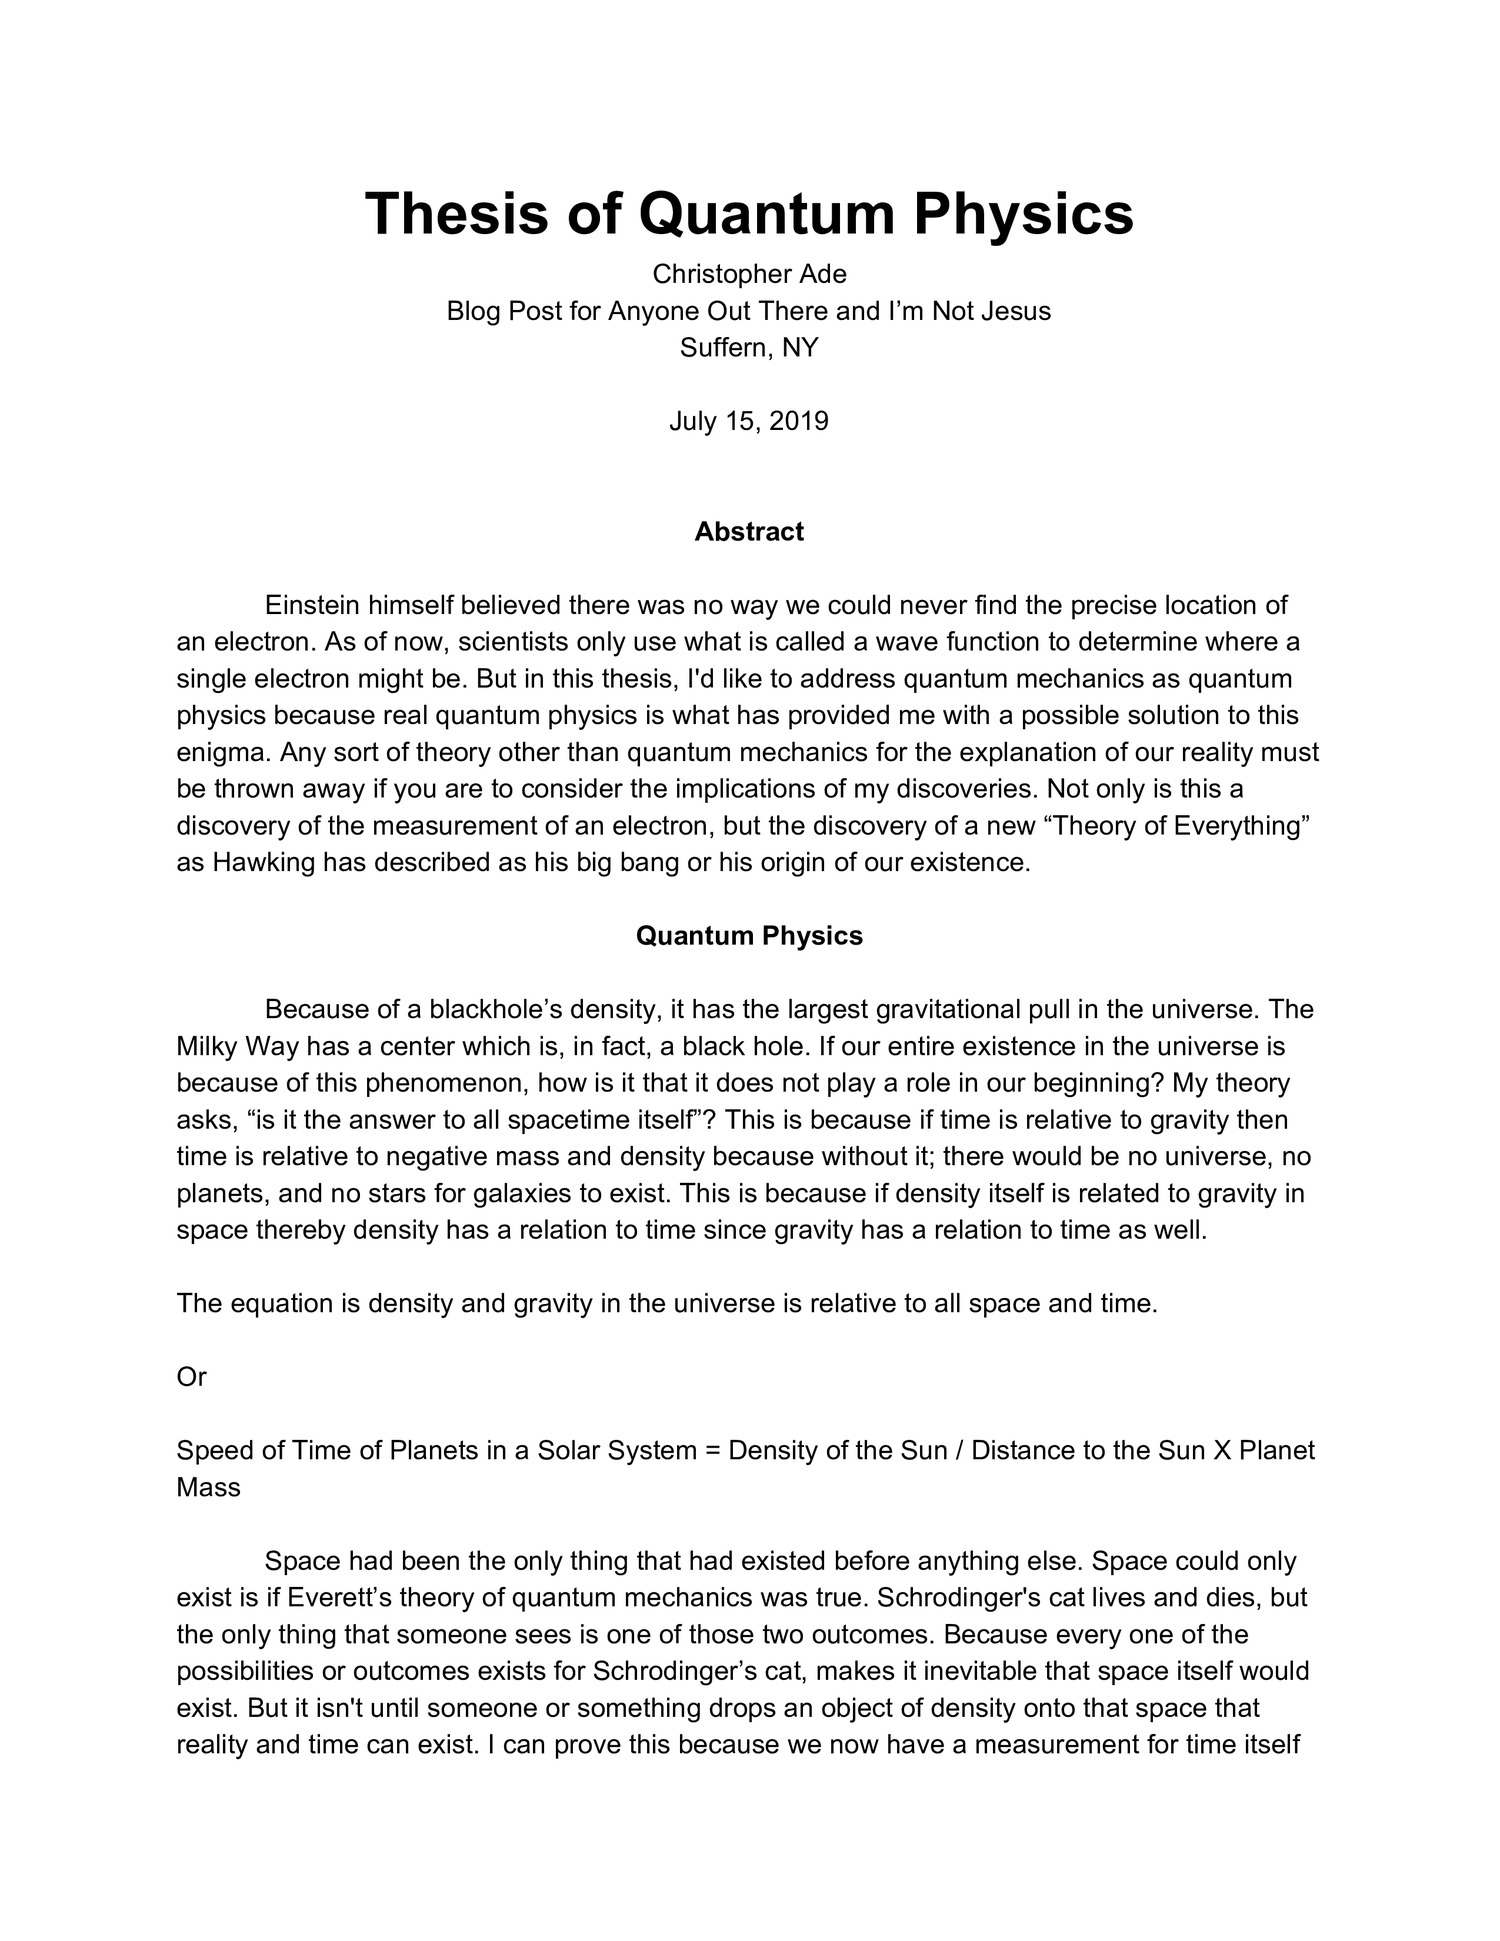 dissertation topics in physics education